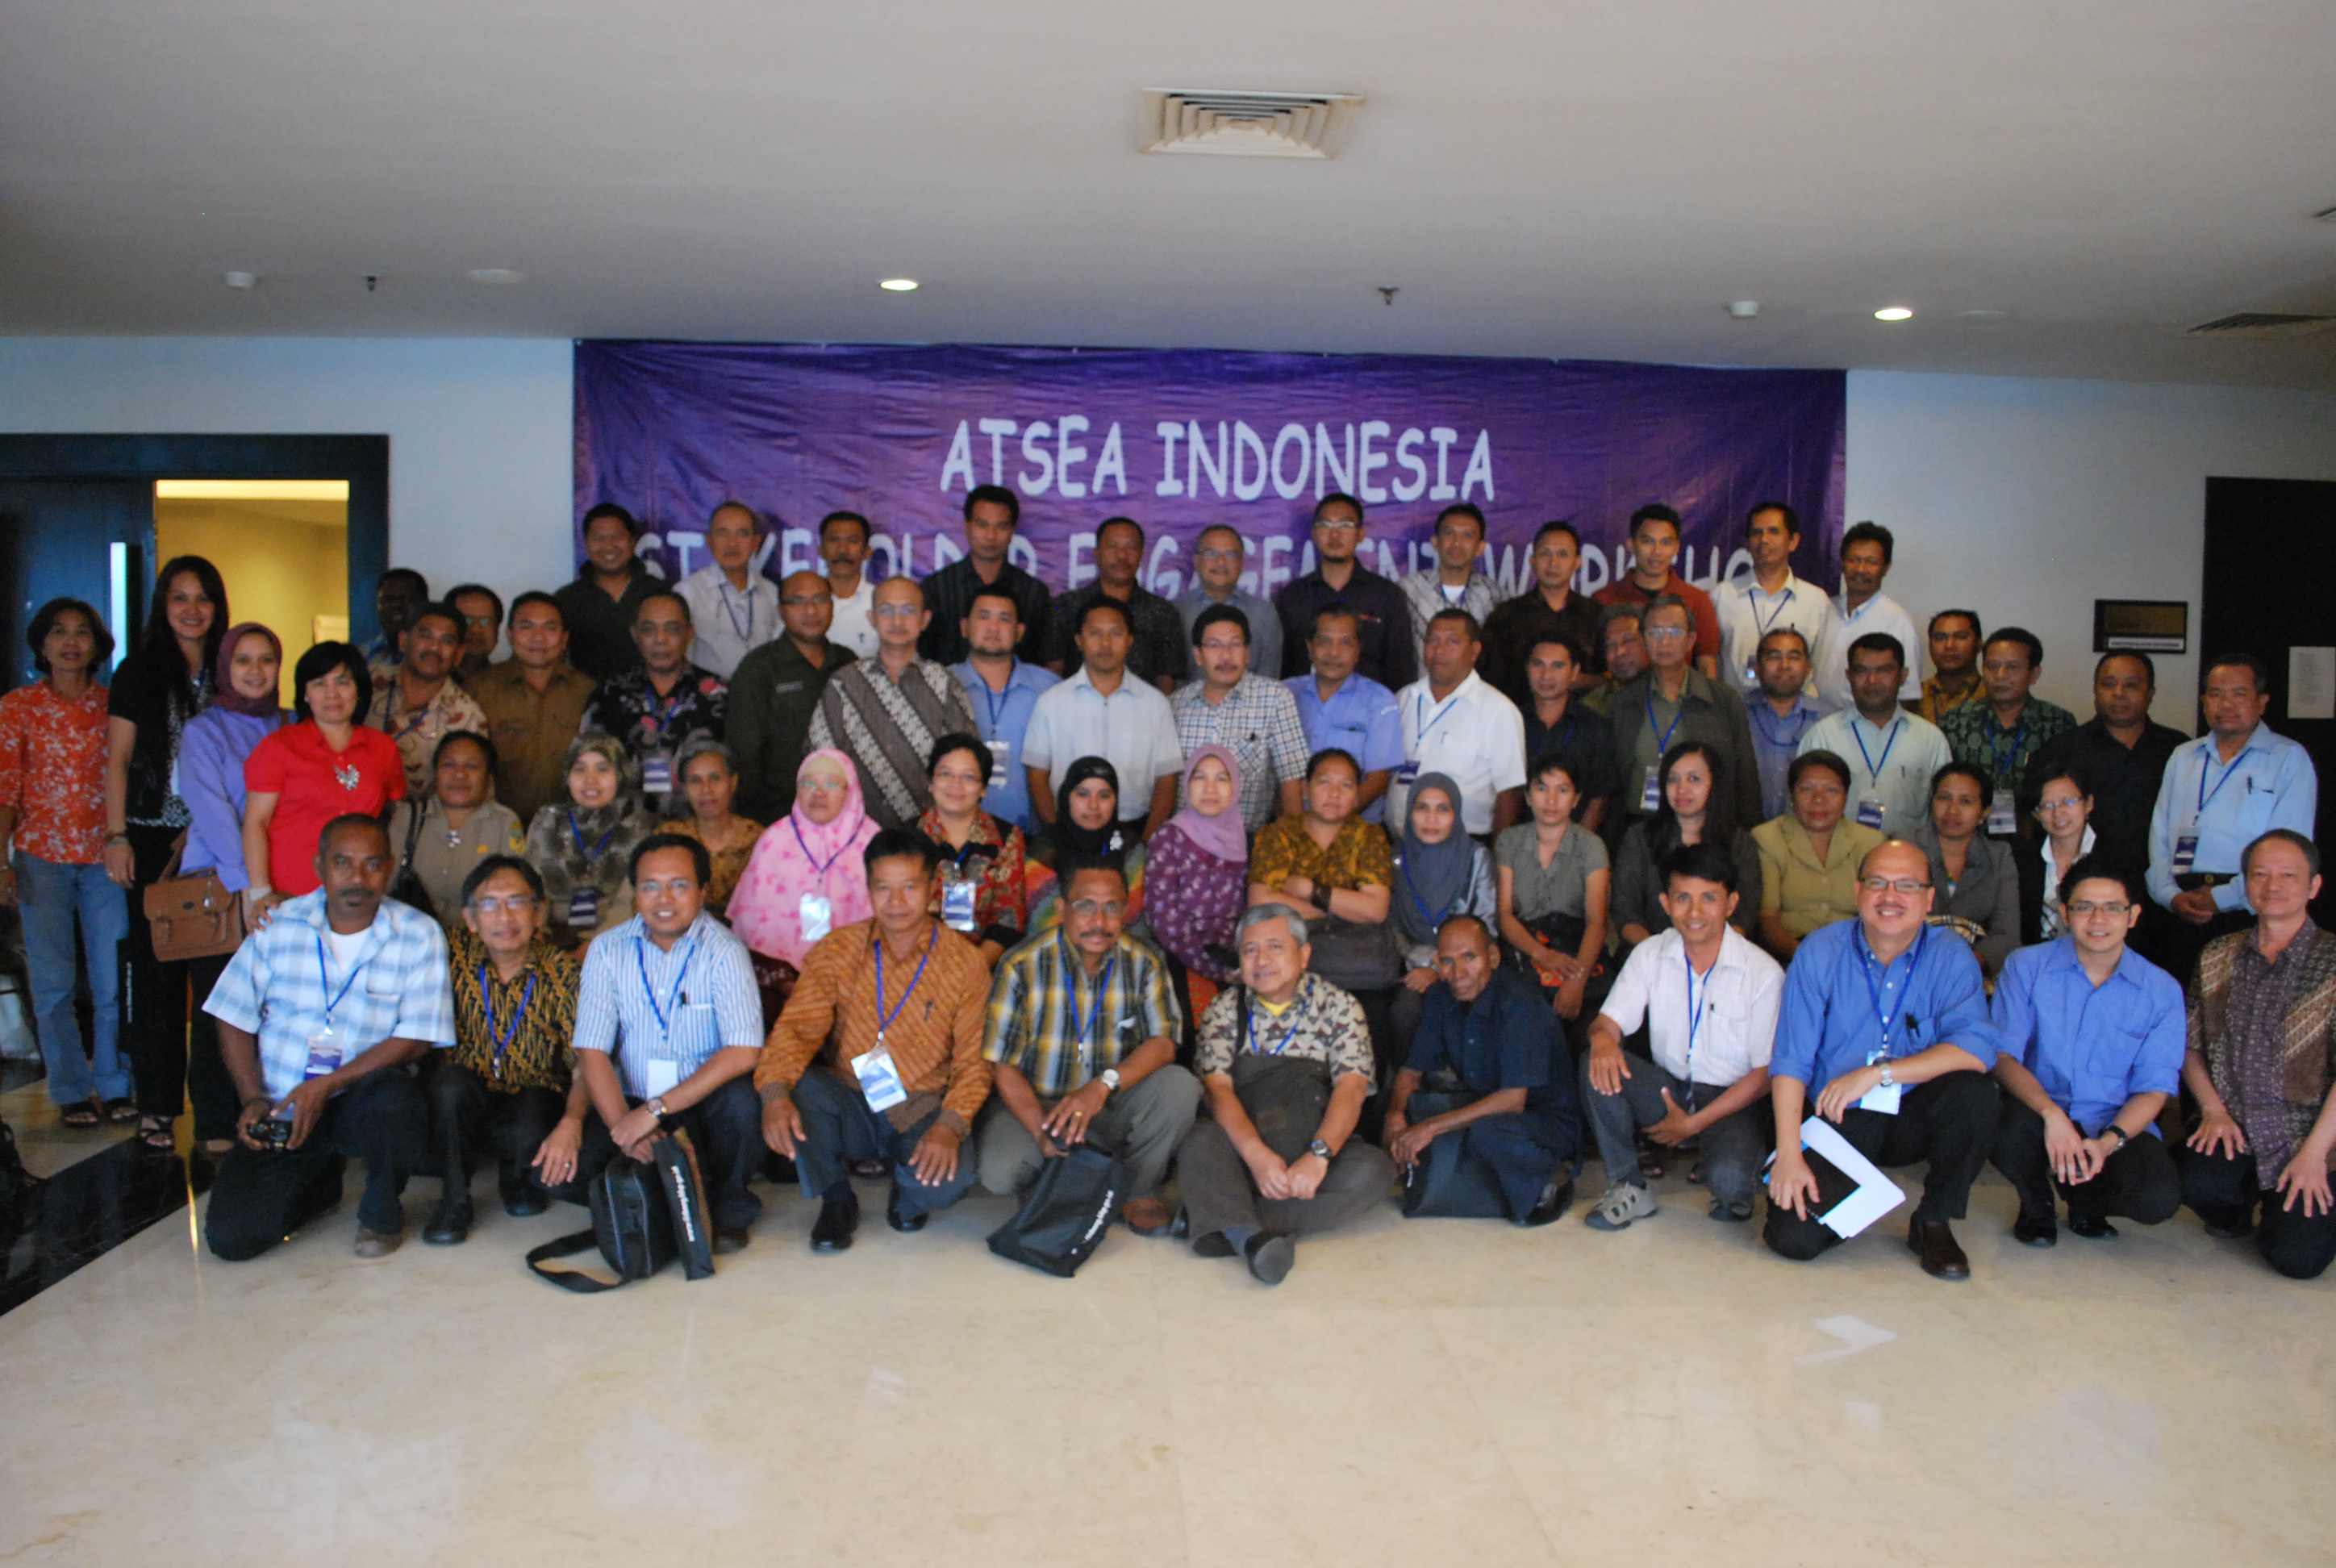 ATSEA – Indonesia Stakeholder Engagement Workshop